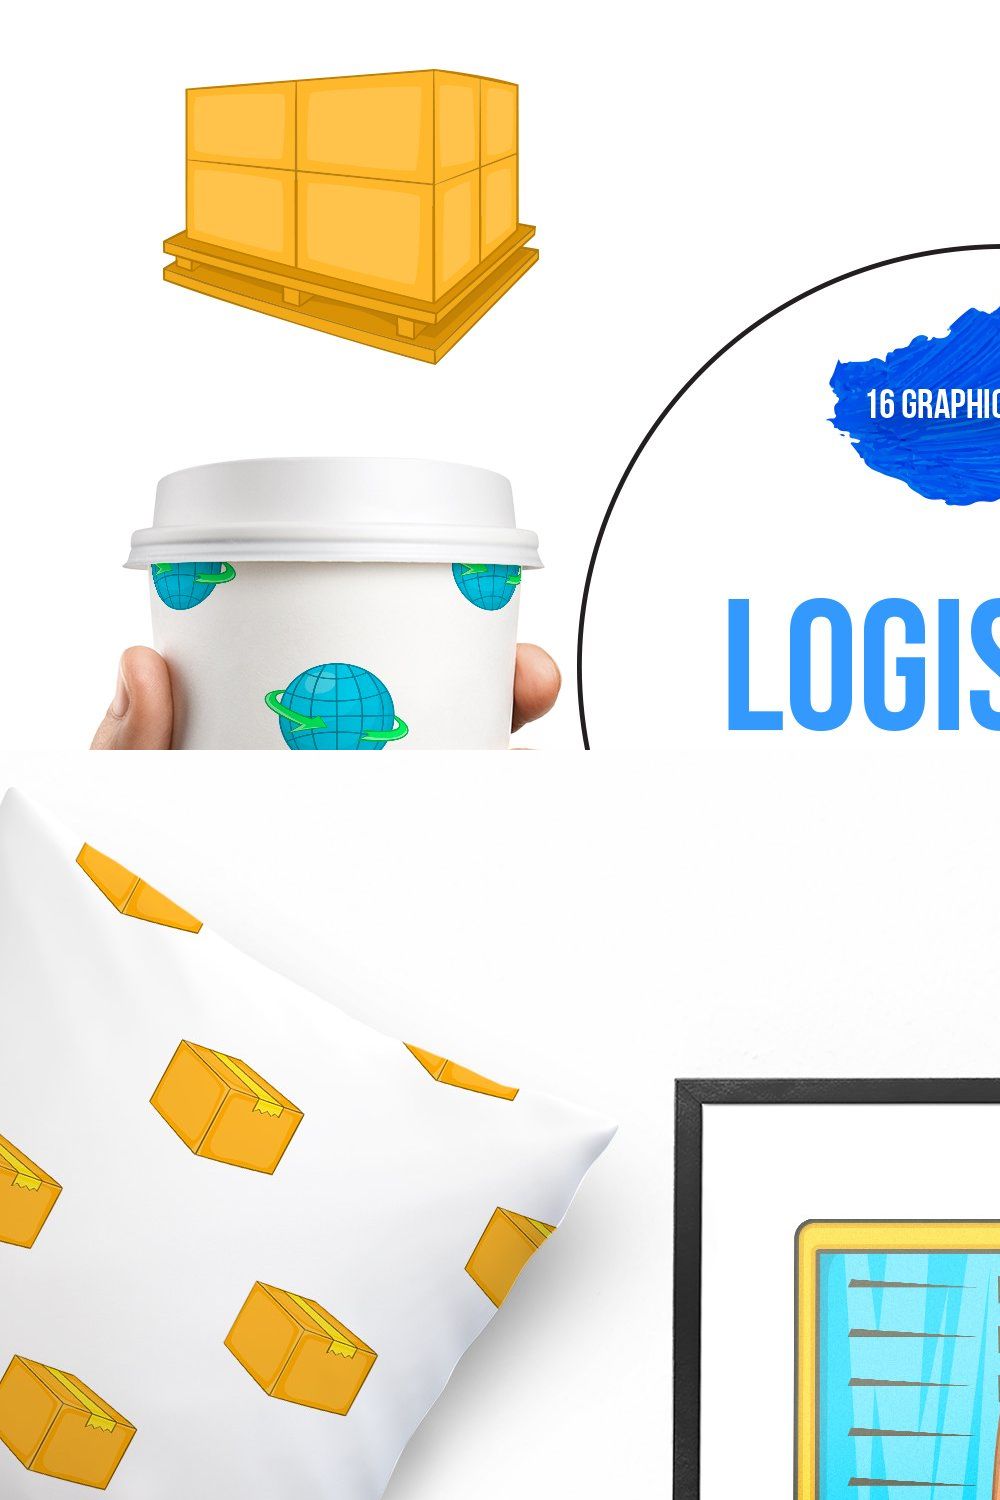 Logistics icons set, cartoon style pinterest preview image.